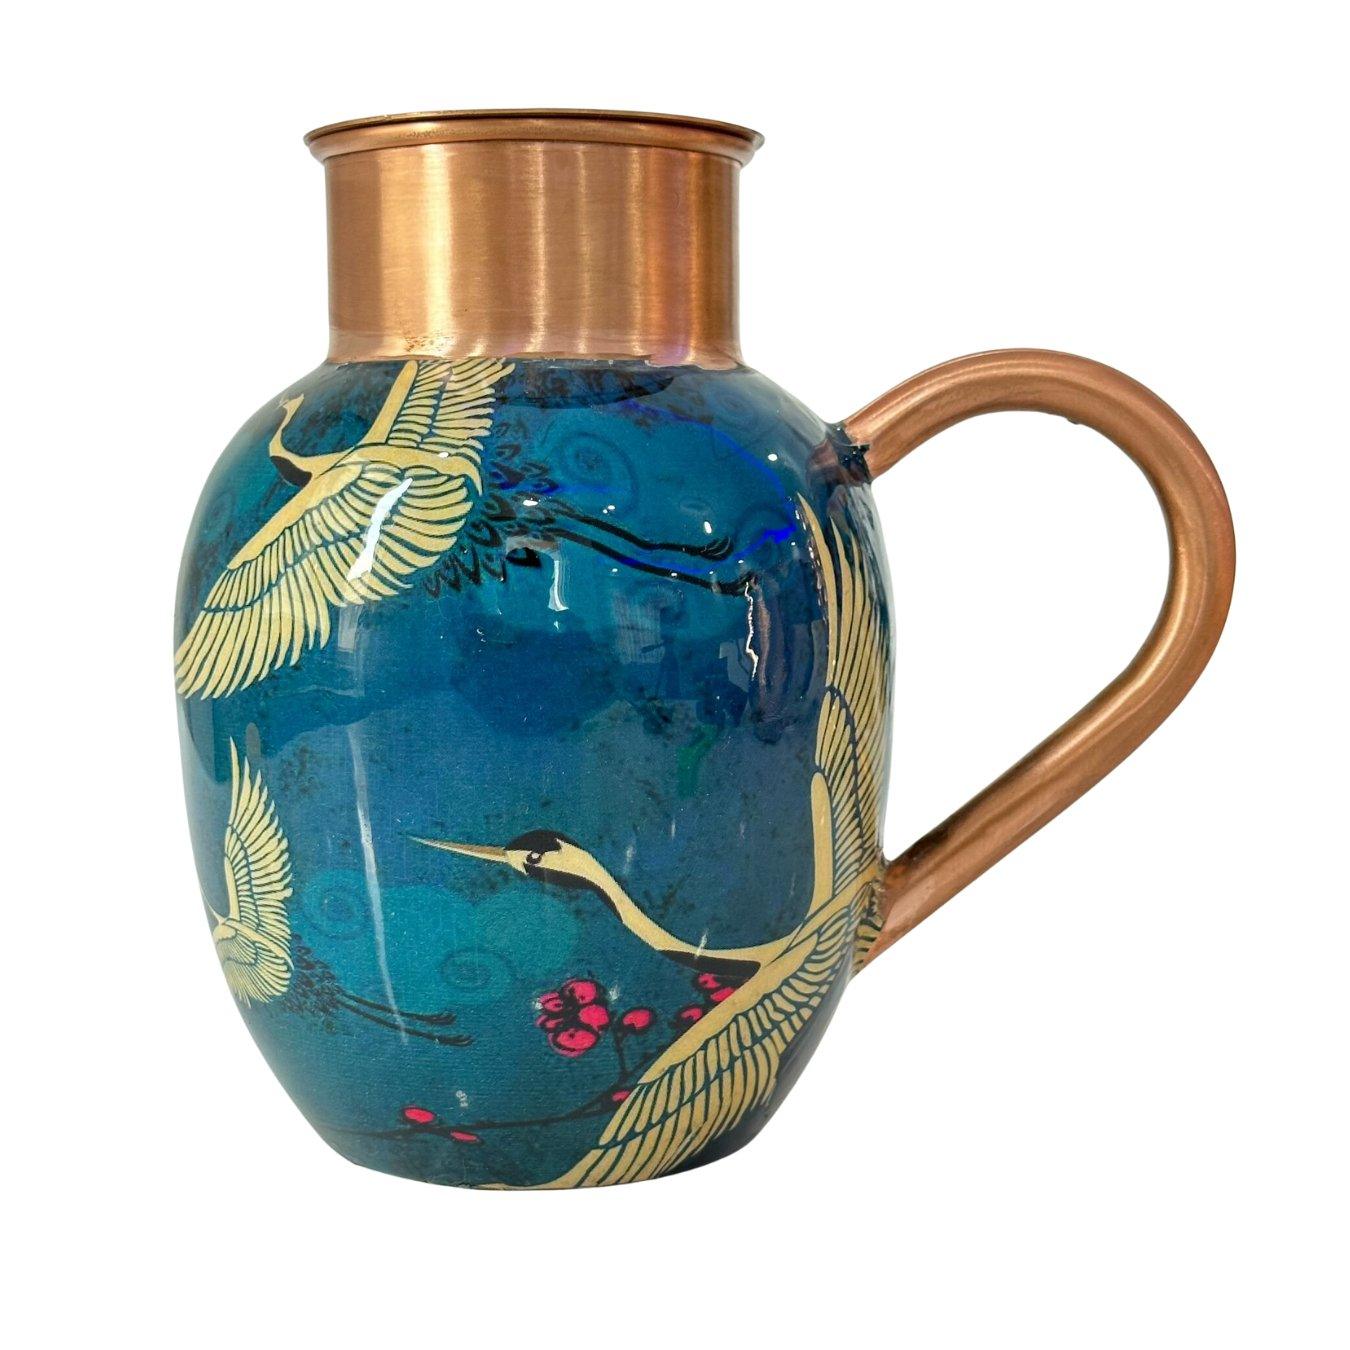 copper pitcher white birds design 